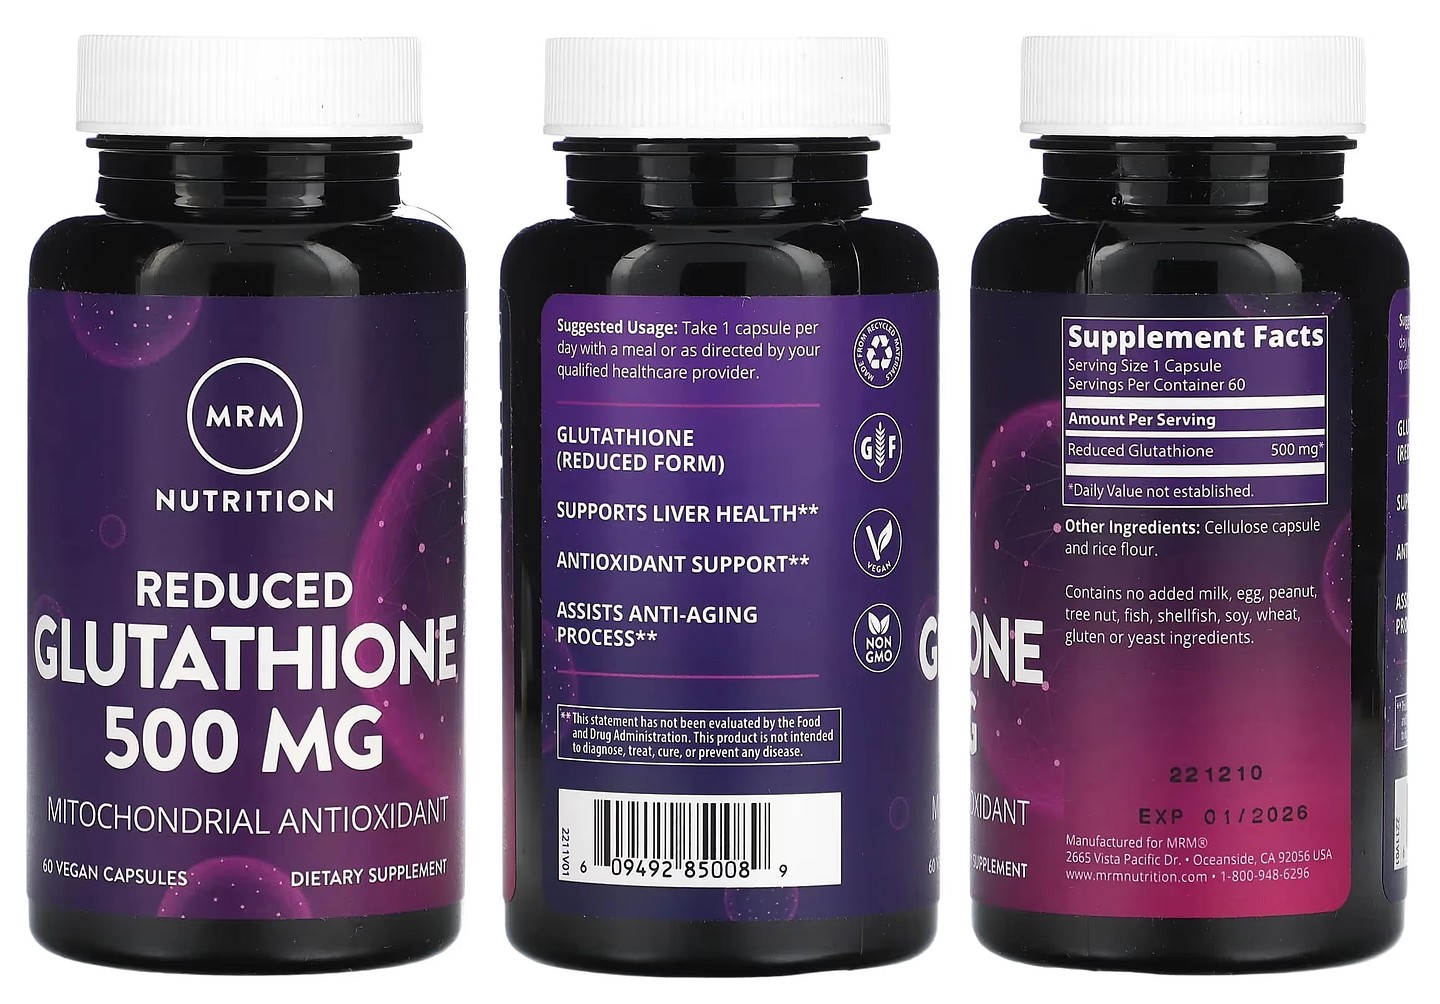 MRM Nutrition, Reduced Glutathione packaging